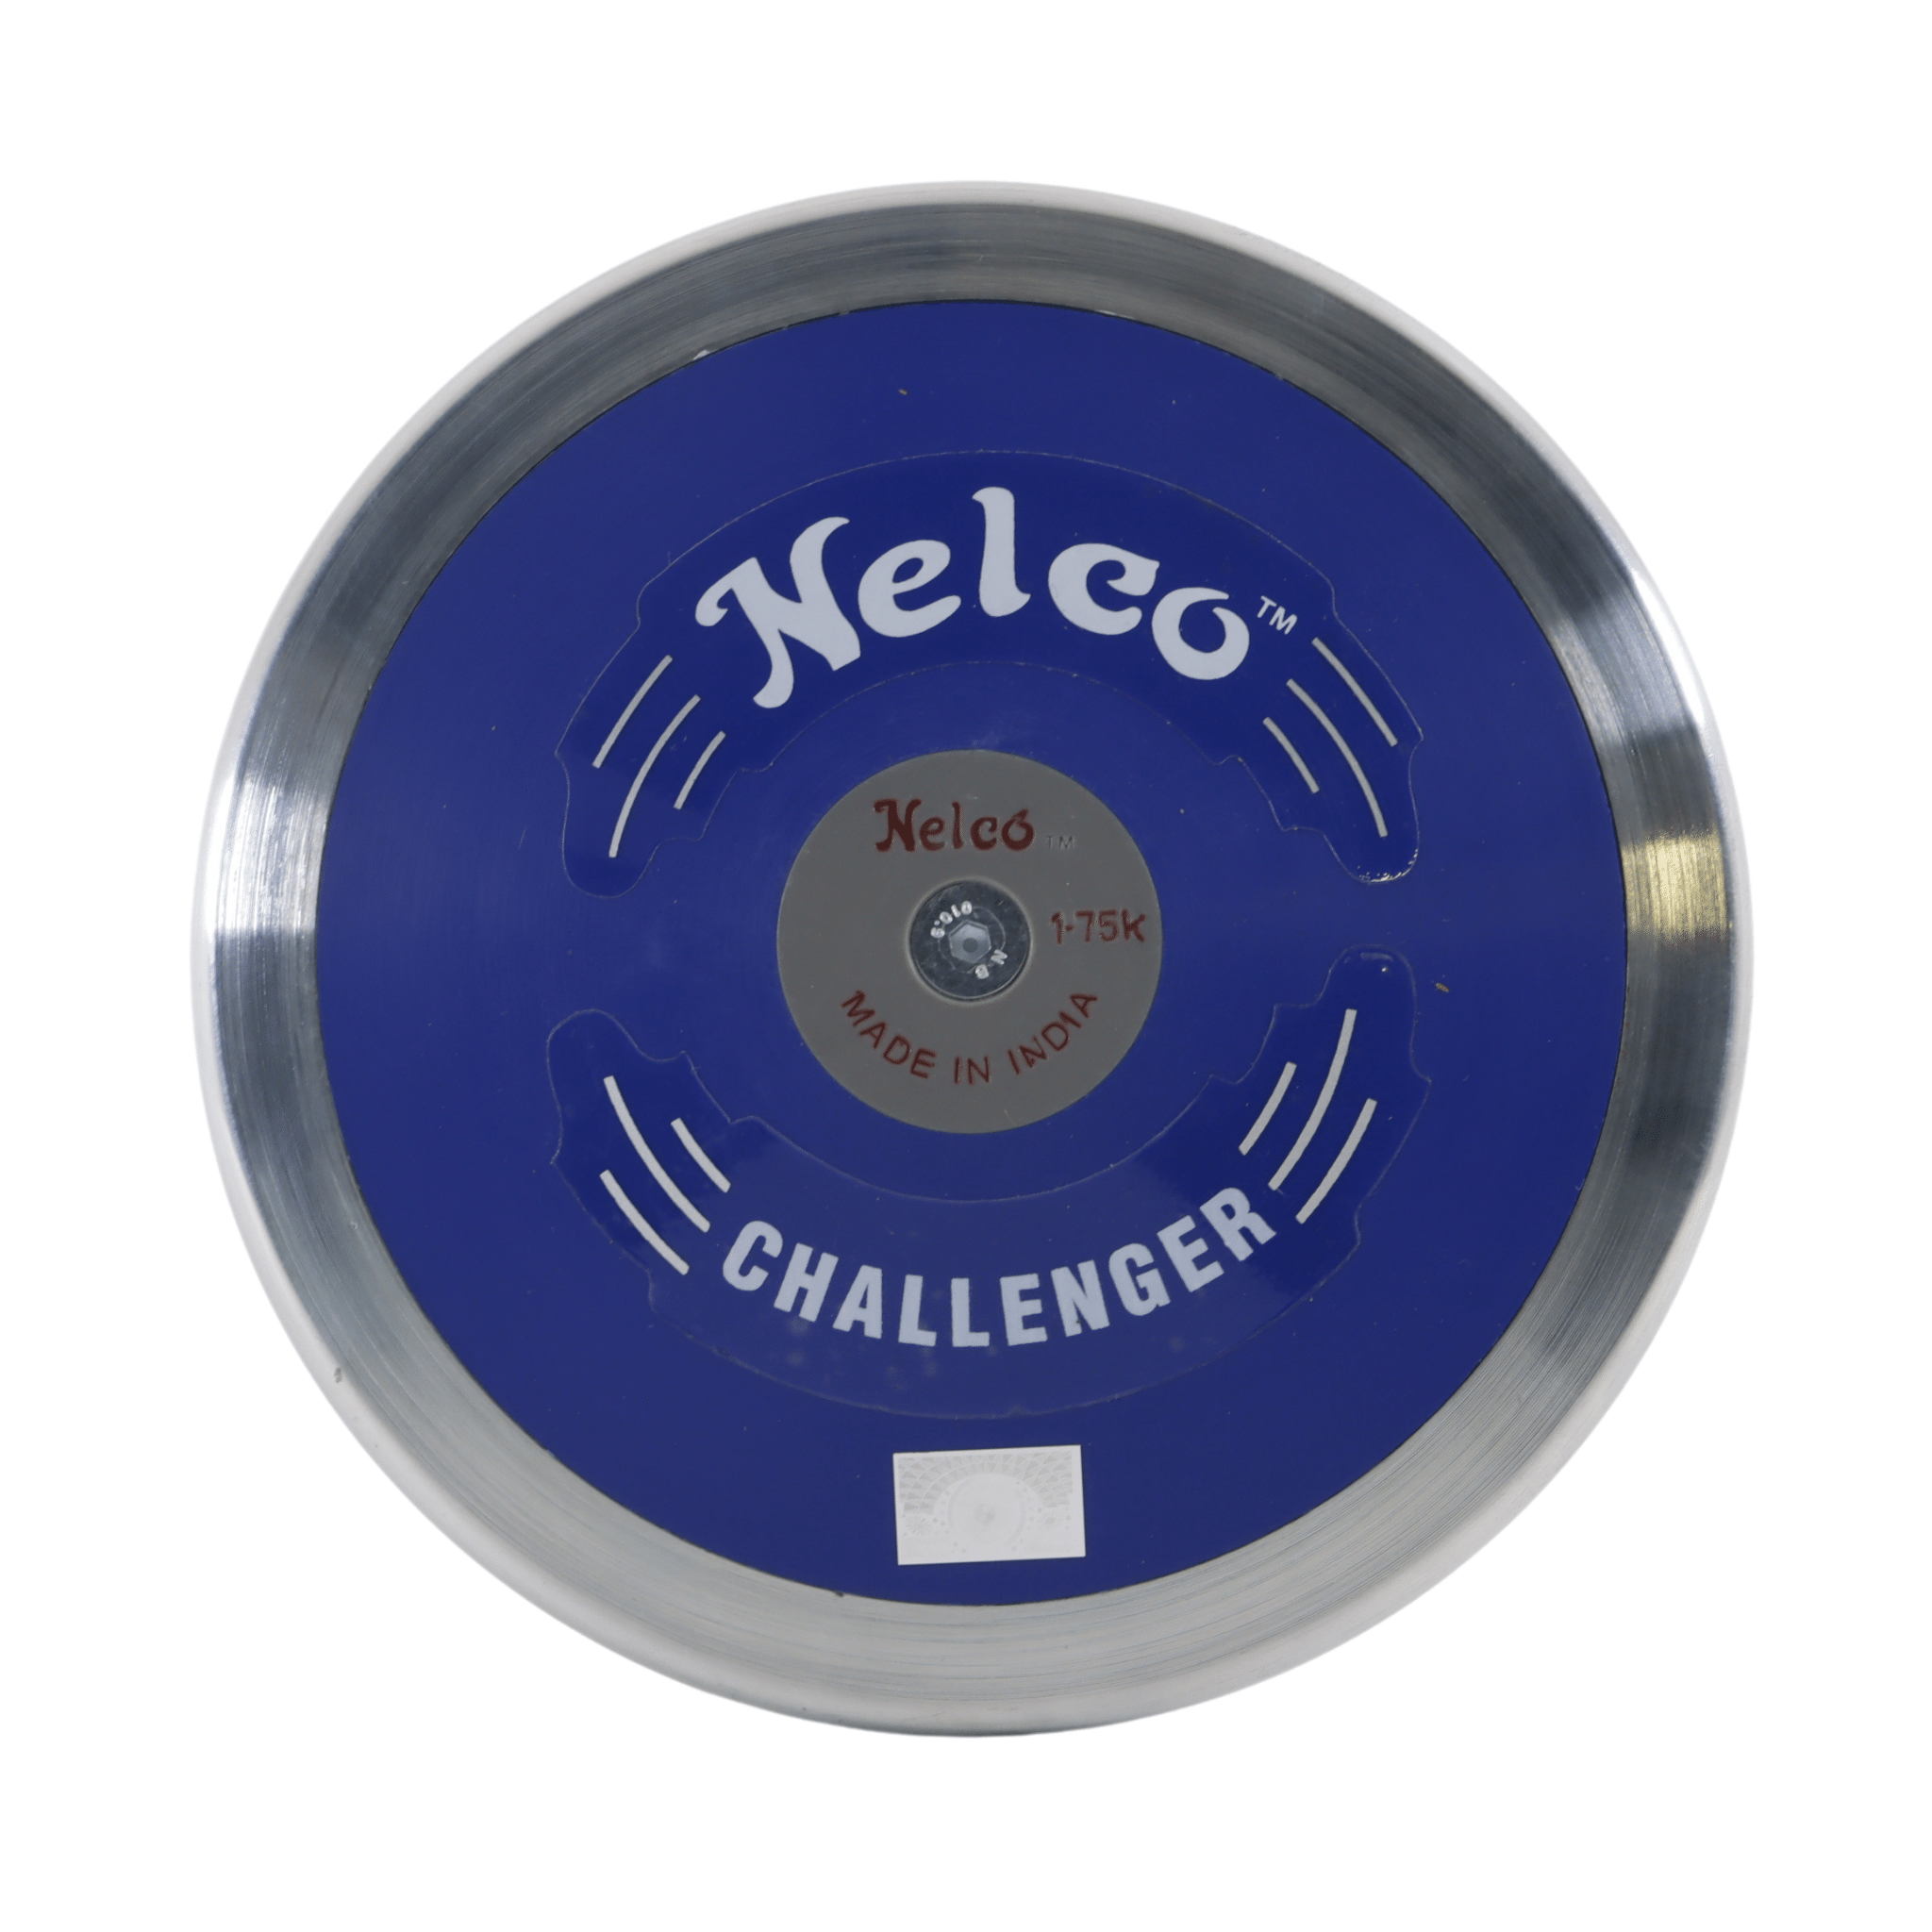 Nelco Challenger discus | Blue Plates, Steel rim | Beginner low-spin | 1.75kg